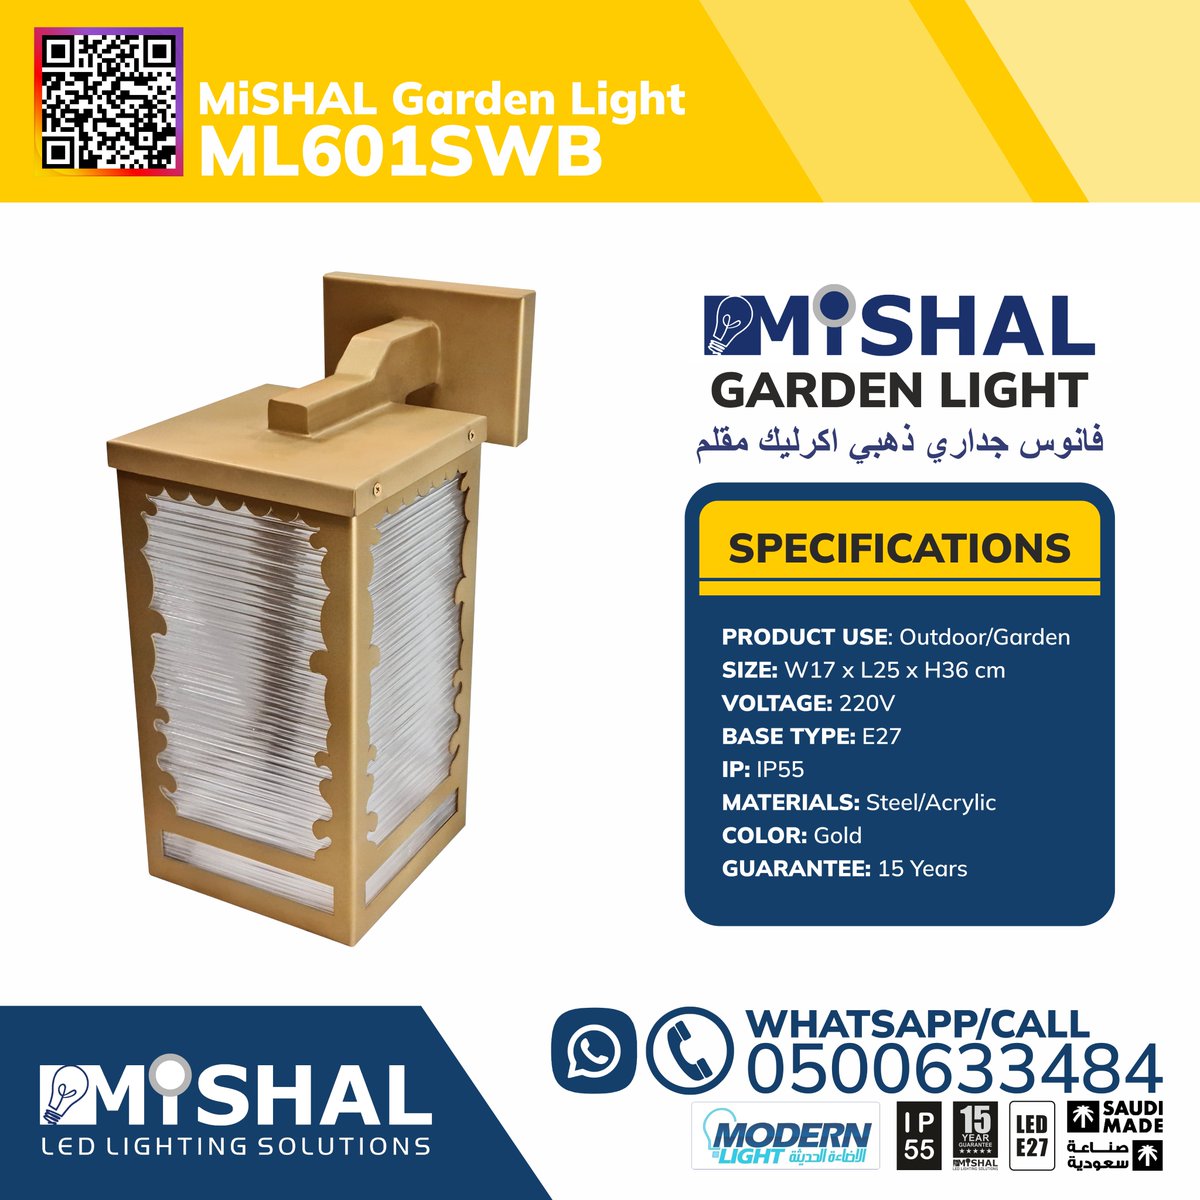 MiSHAL Garden Lights

Instagram Account: instagram.com/mishalledlight/

#gardenlight #mishalgardenlight #mishalledlight #mishalledlightingsolutions #postlamp #WallLamp #SaudiArabia